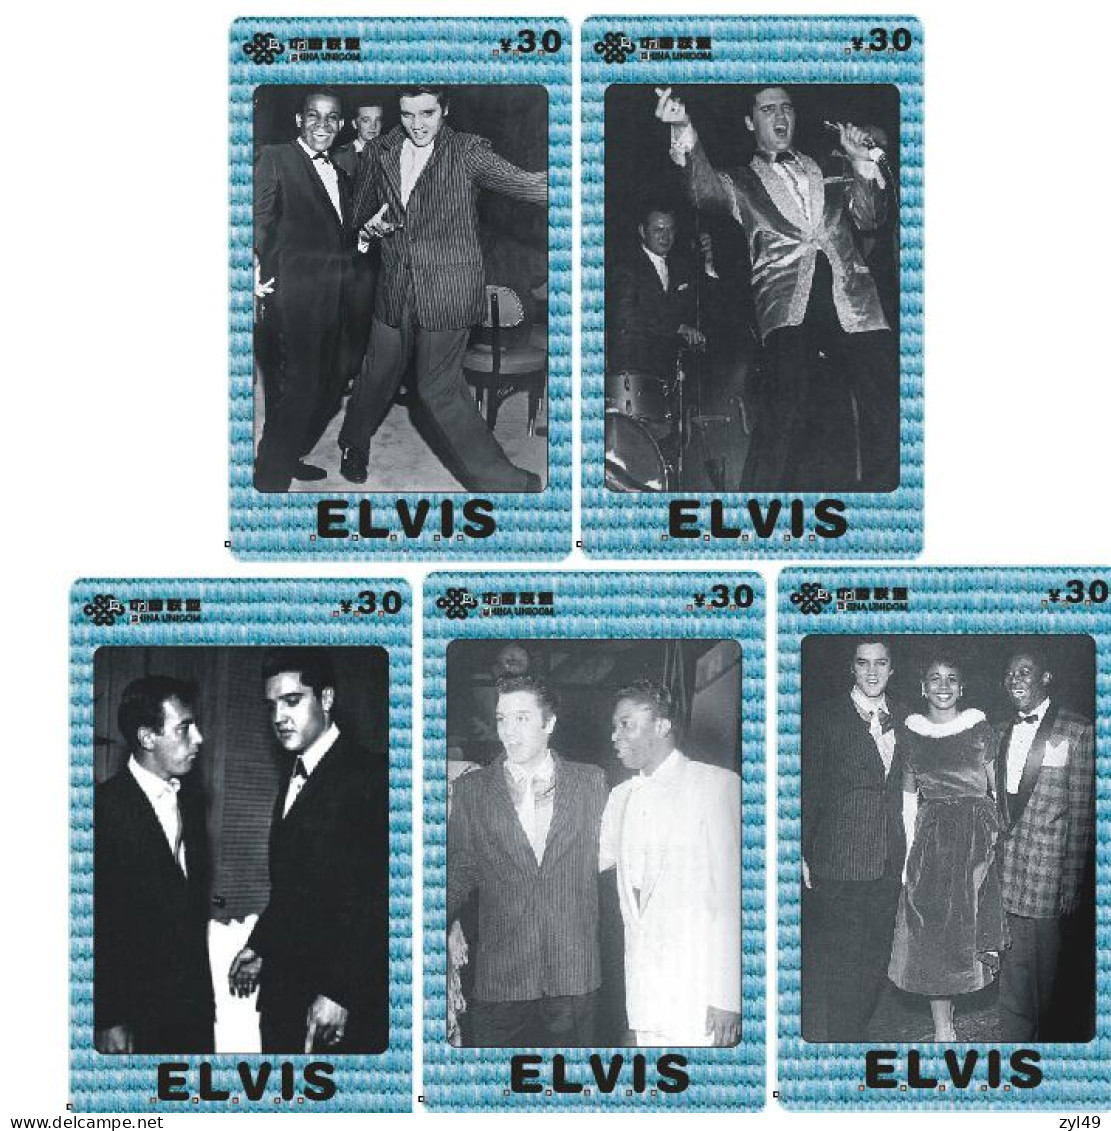 M14005 China phone cards Elvis Presley 275pcs